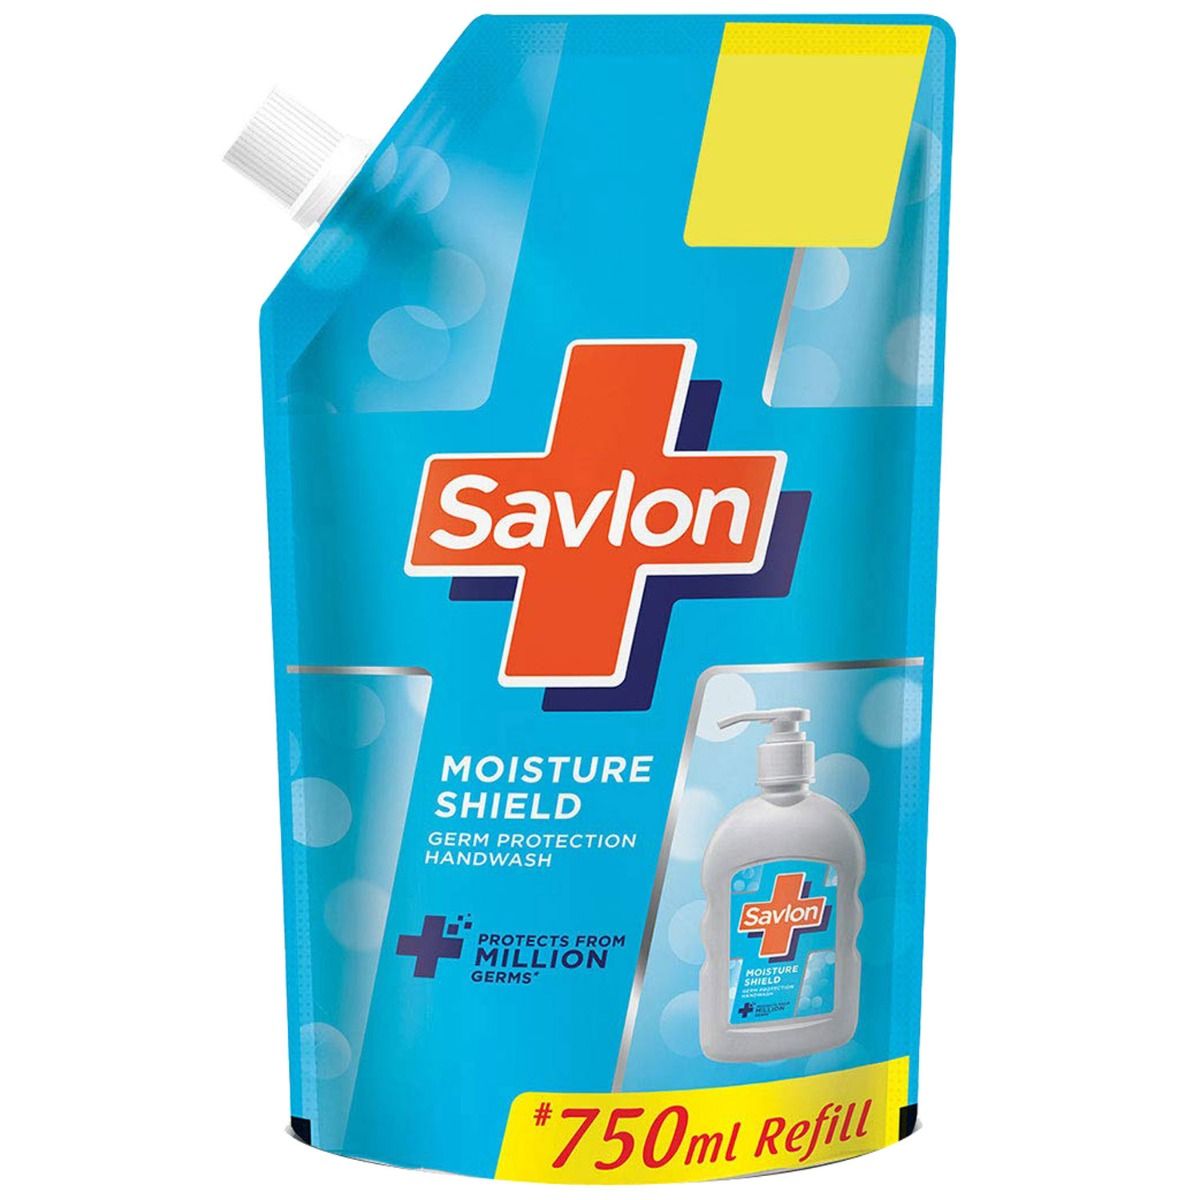 Savlon Moisture Shield Germ Protection Handwash, 750 ml Refill Pack, Pack of 1 